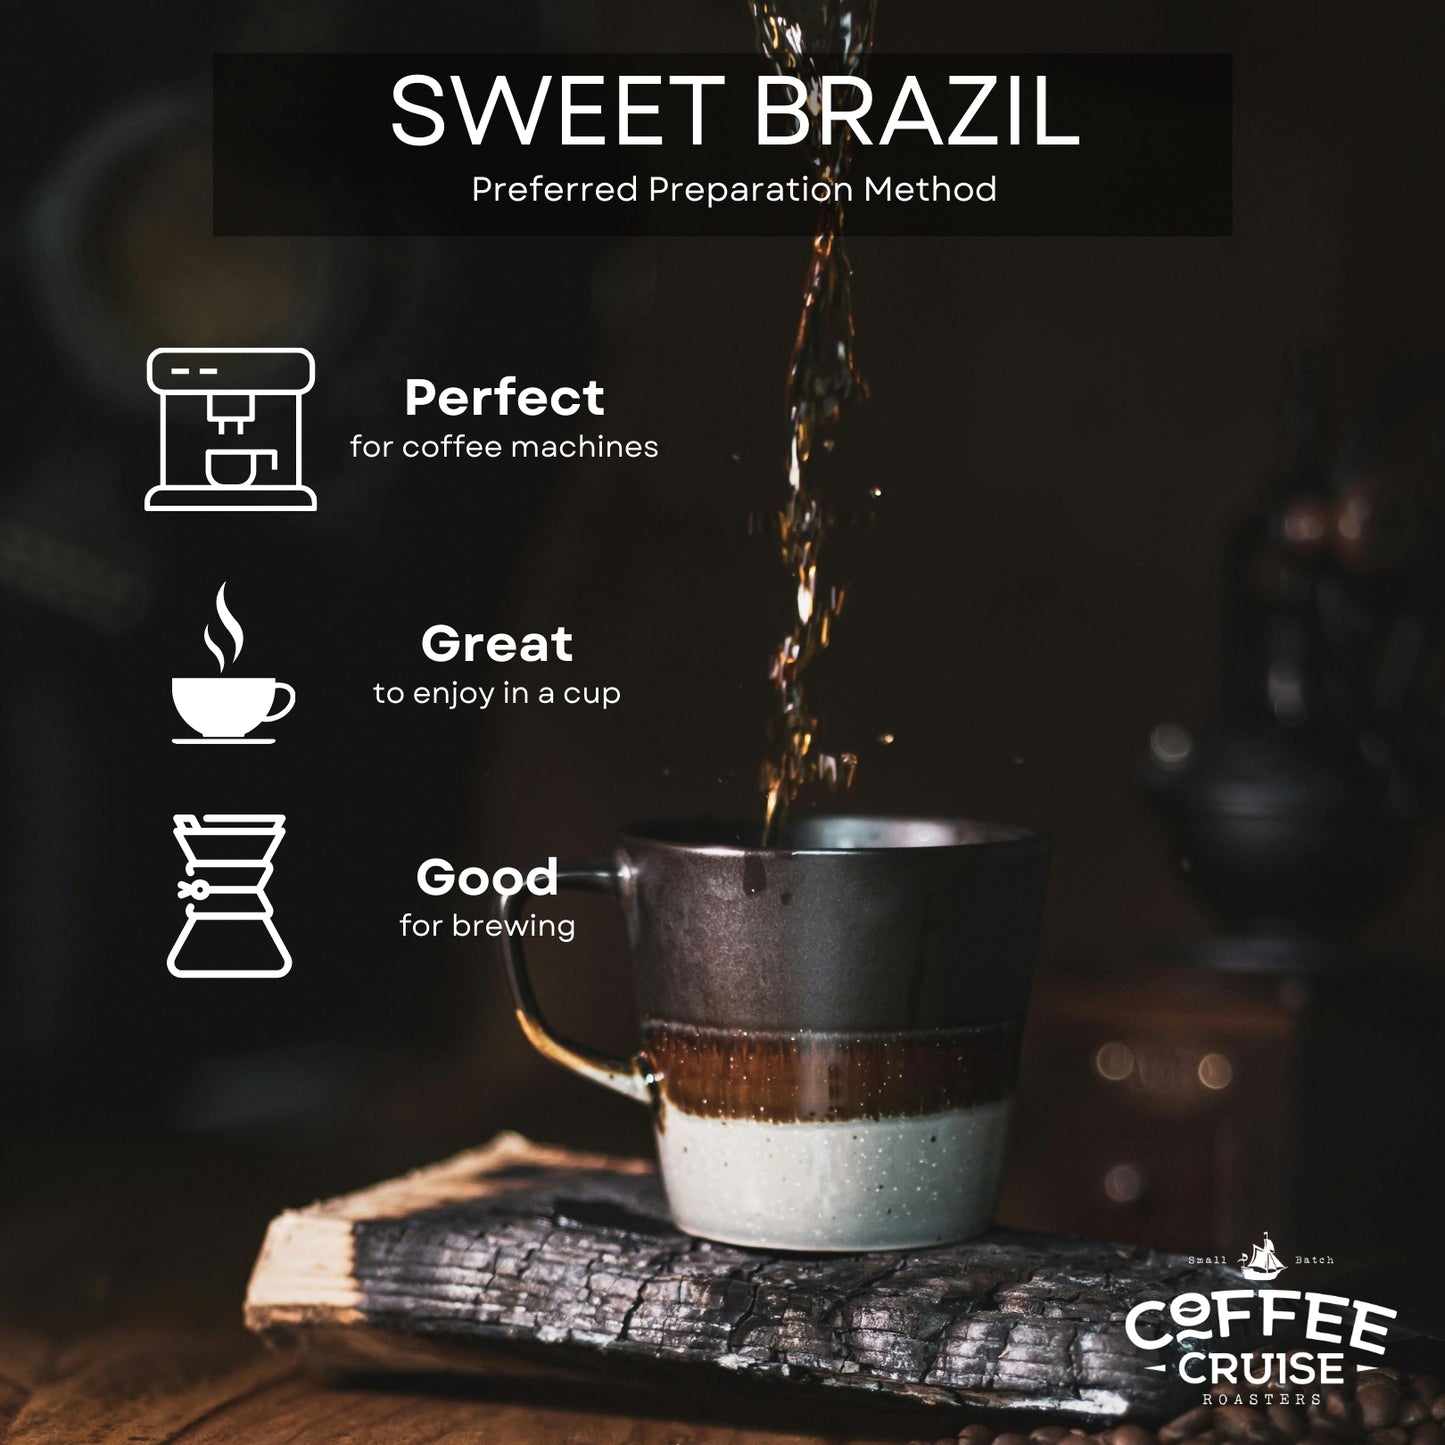 COFFEE CRUISE Sweet Brazil Brazilian Coffee Beans 1kg - Medium Roasting - Aroma Cocoa and chocolate - For All Coffee Machines - 100% Arabica